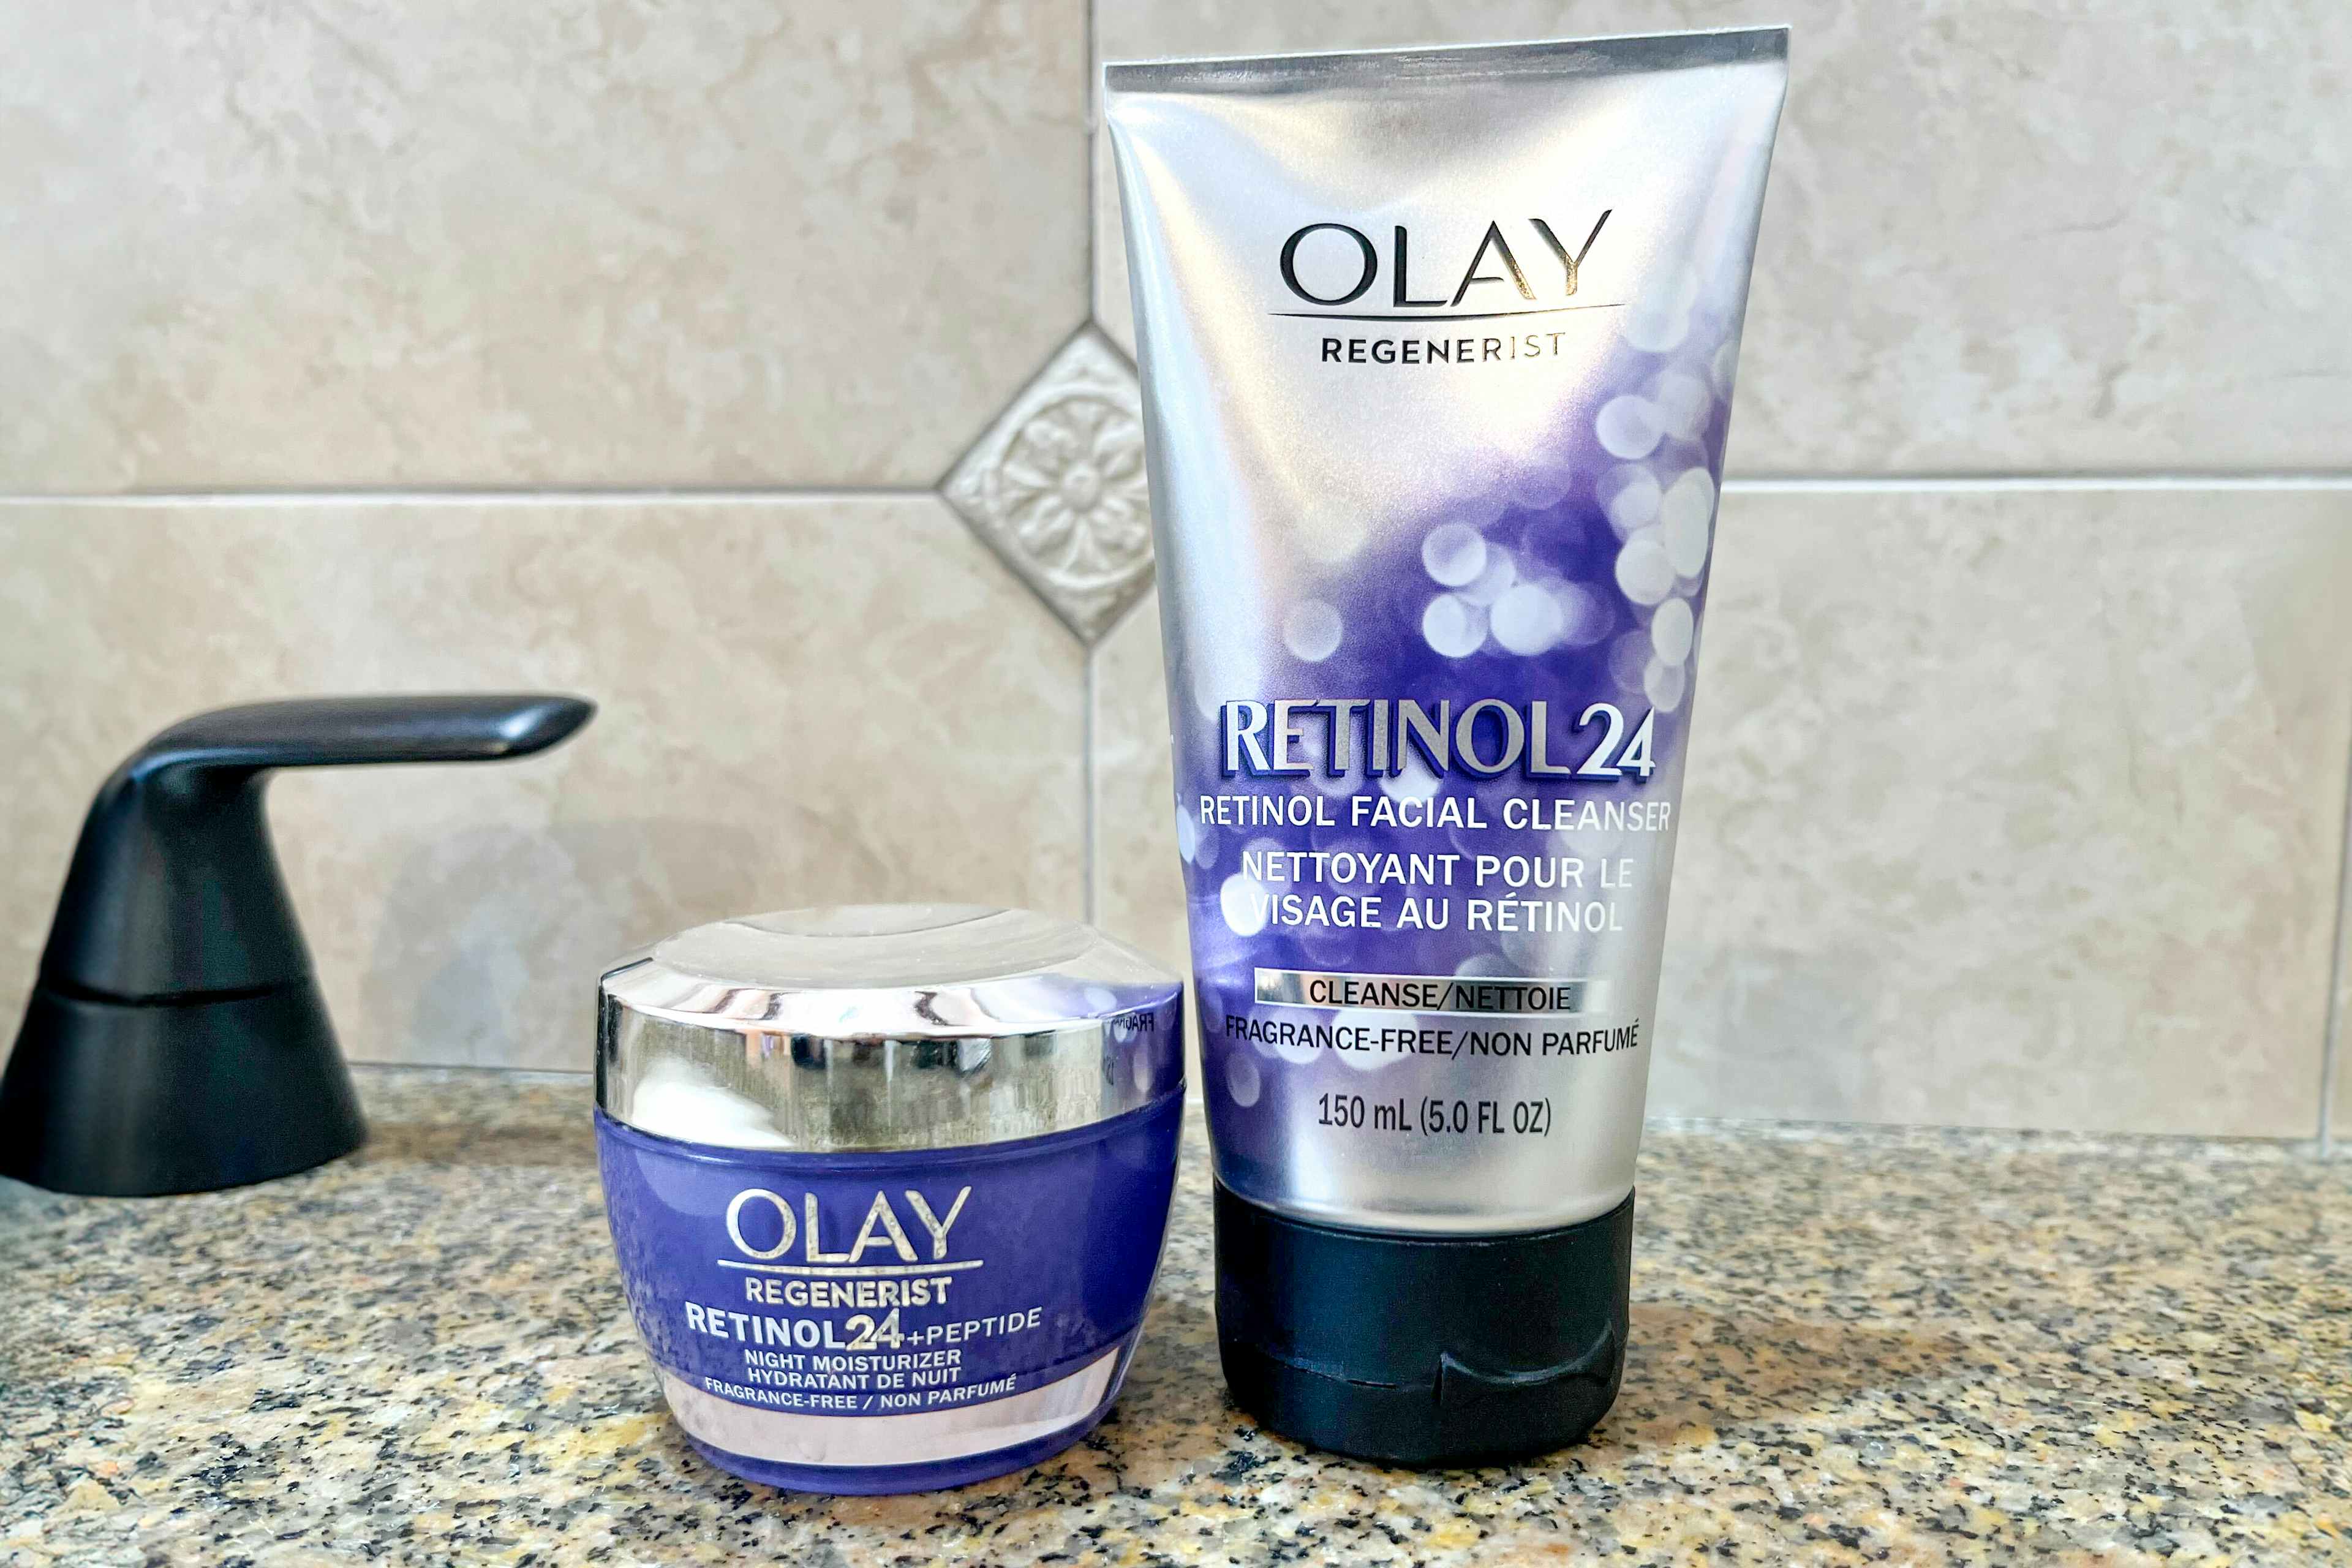 olay regenerist retinol facial cleanser and moisturizer on a bathroom counter